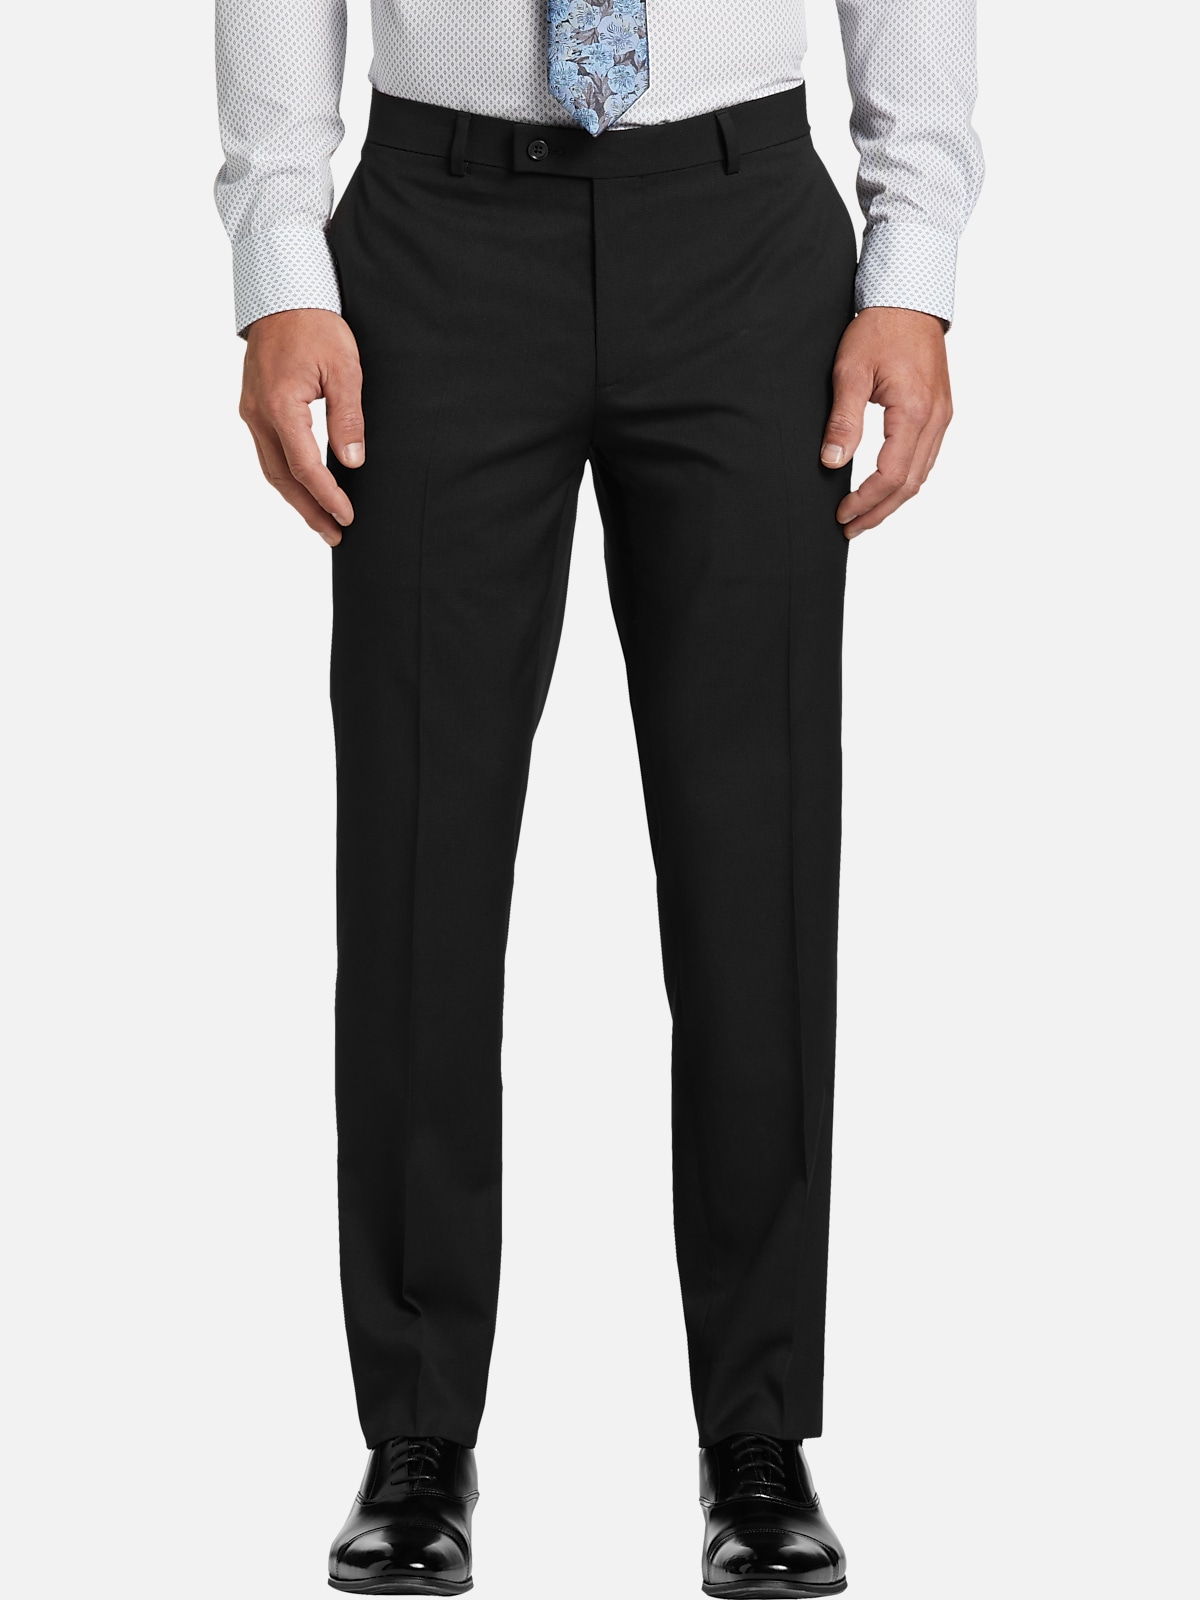 Wilke-Rodriguez Slim Fit Suit Separates Pants, All Sale